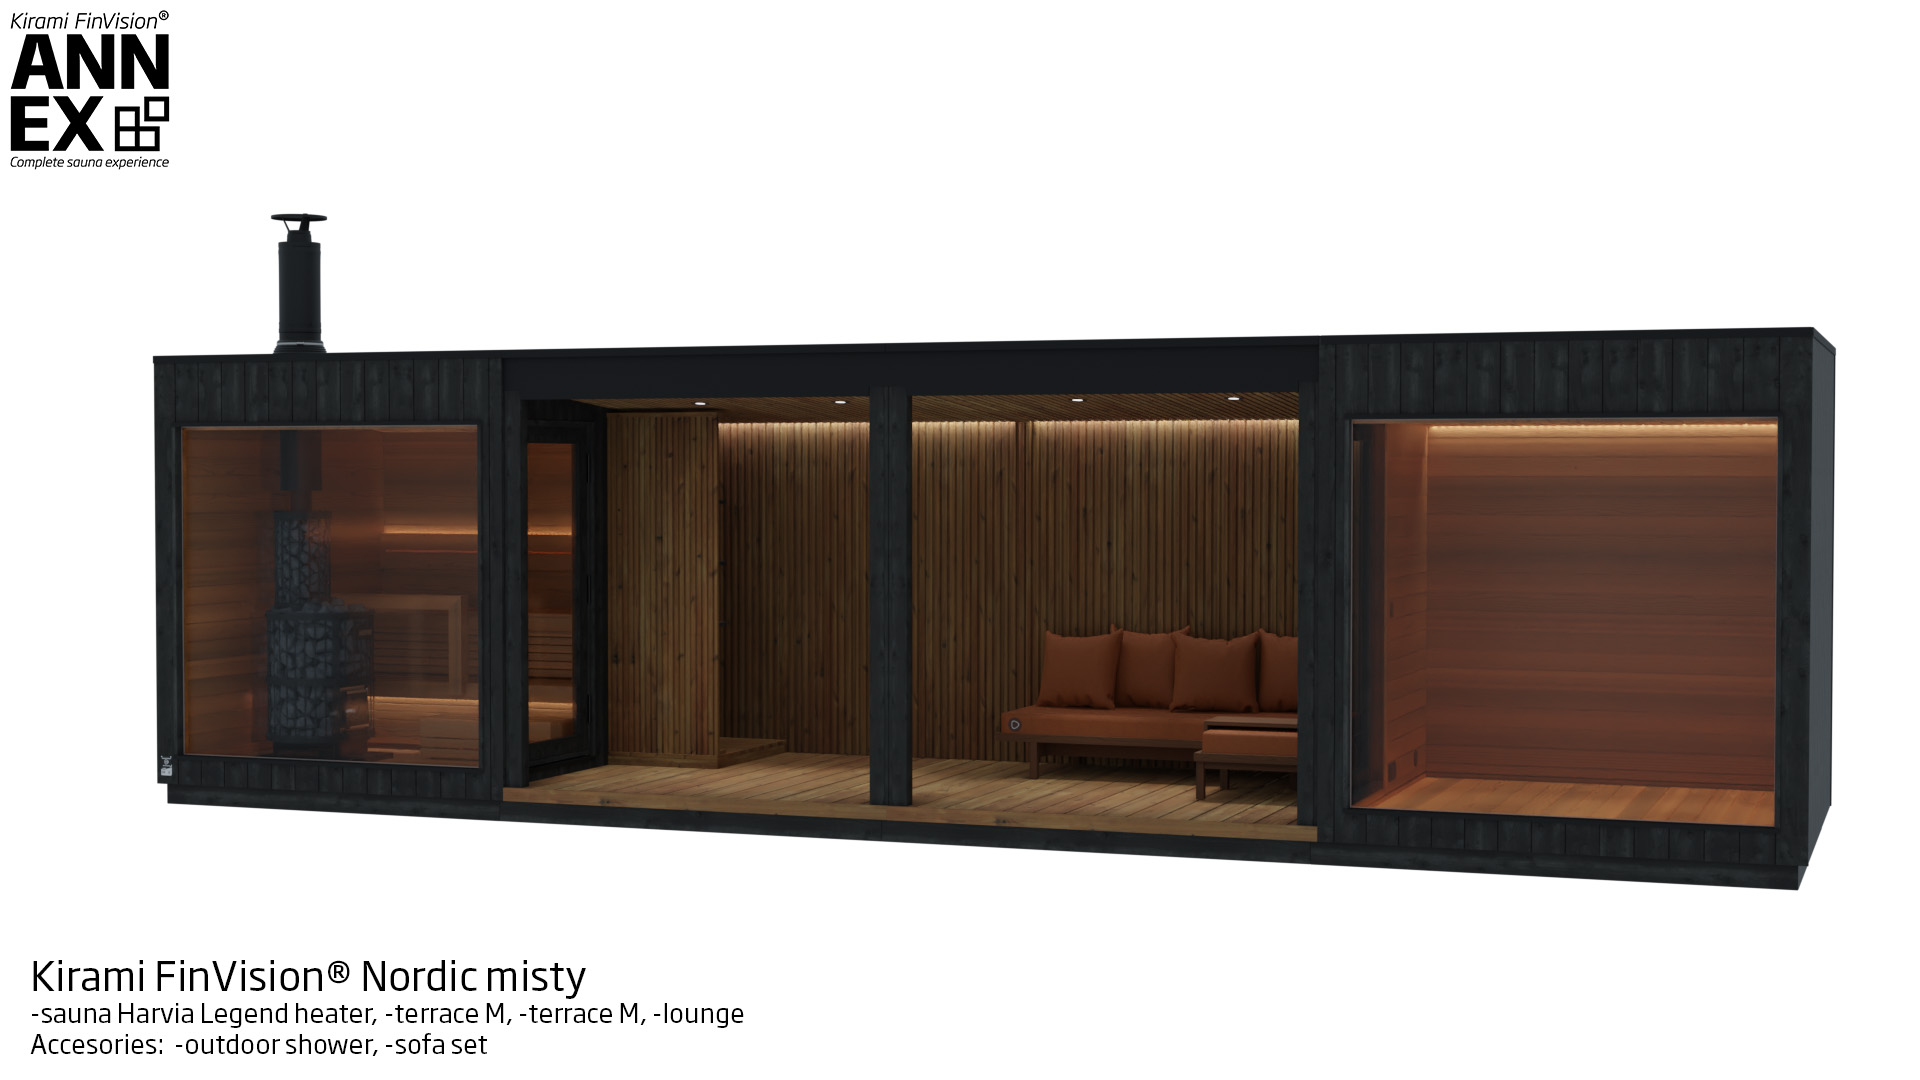 Kirami FinVision® -sauna (with Harvia Legend heater), -terrace M, -terrace M, -lounge Nordic misty | Kirami FinVision® Annex